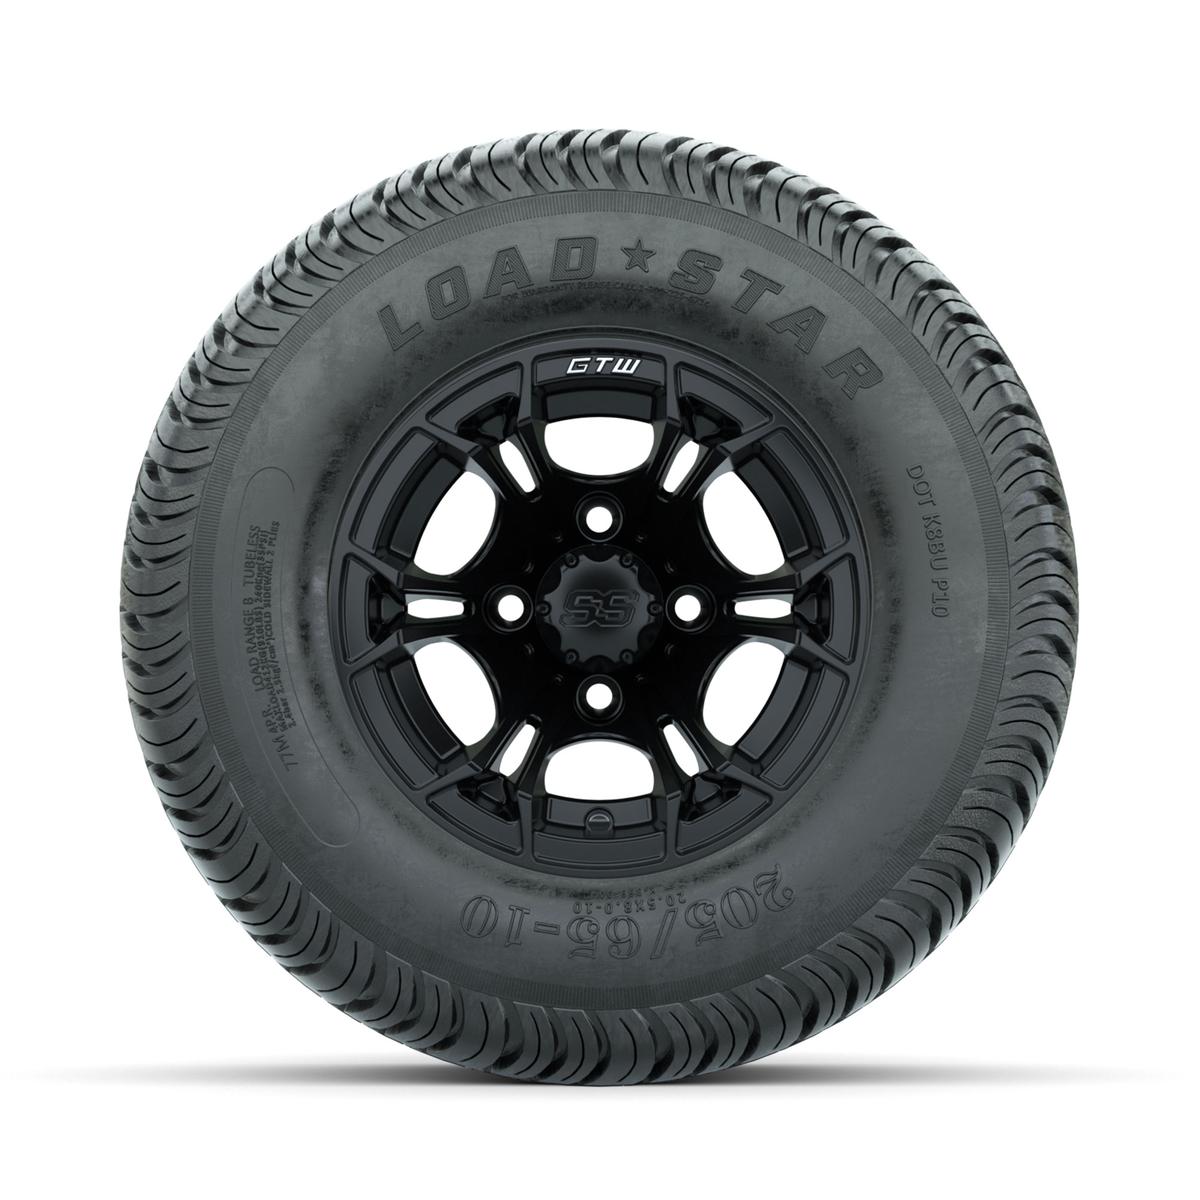 GTW Spyder Matte Black 10 in Wheels with 205/65-10 Kenda Load Star Street Tires – Full Set